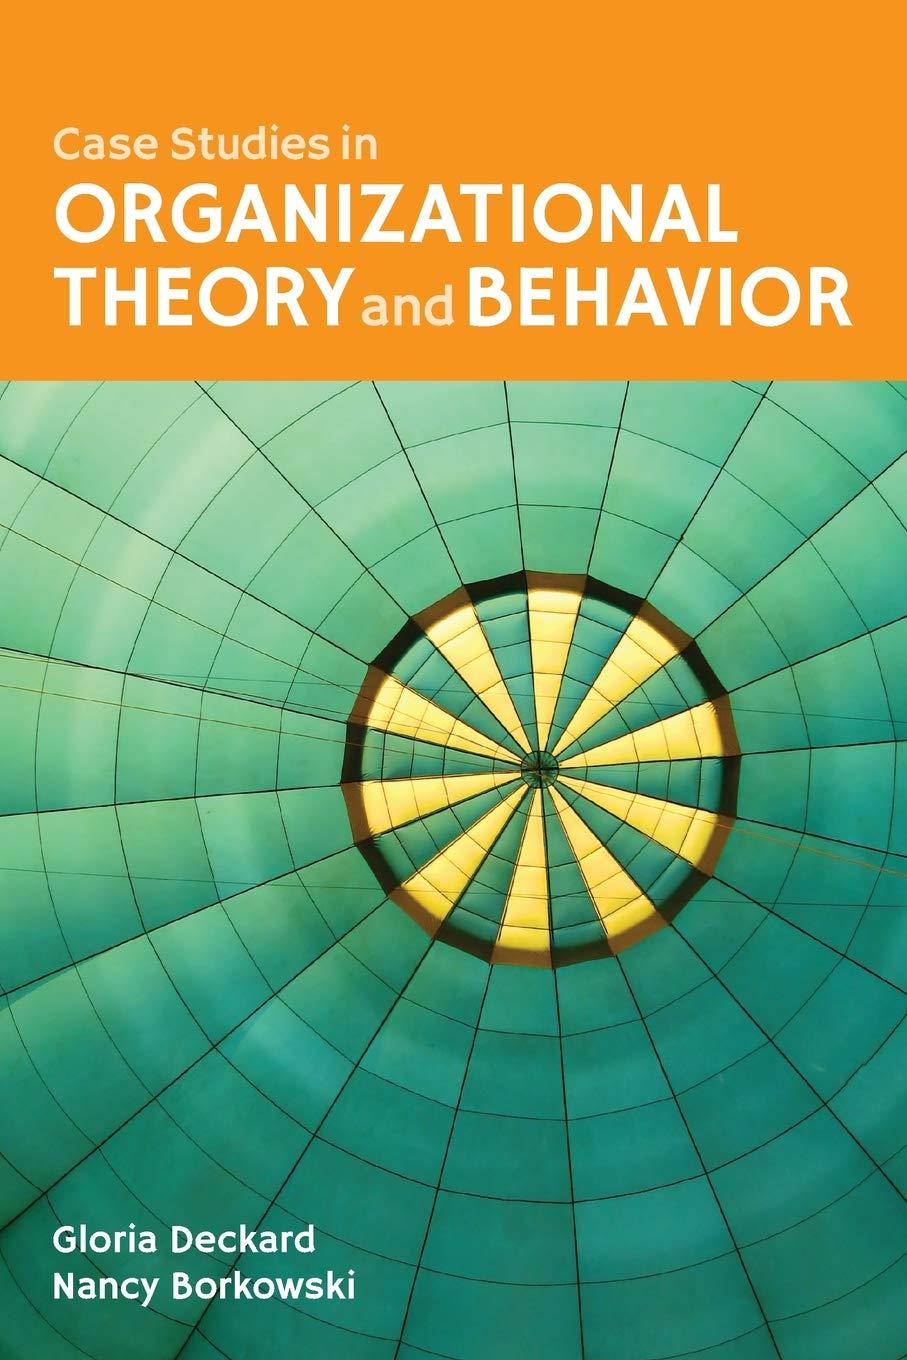 case studies in organizational behavior and theory for health care 1st edition nancy borkowski, gloria